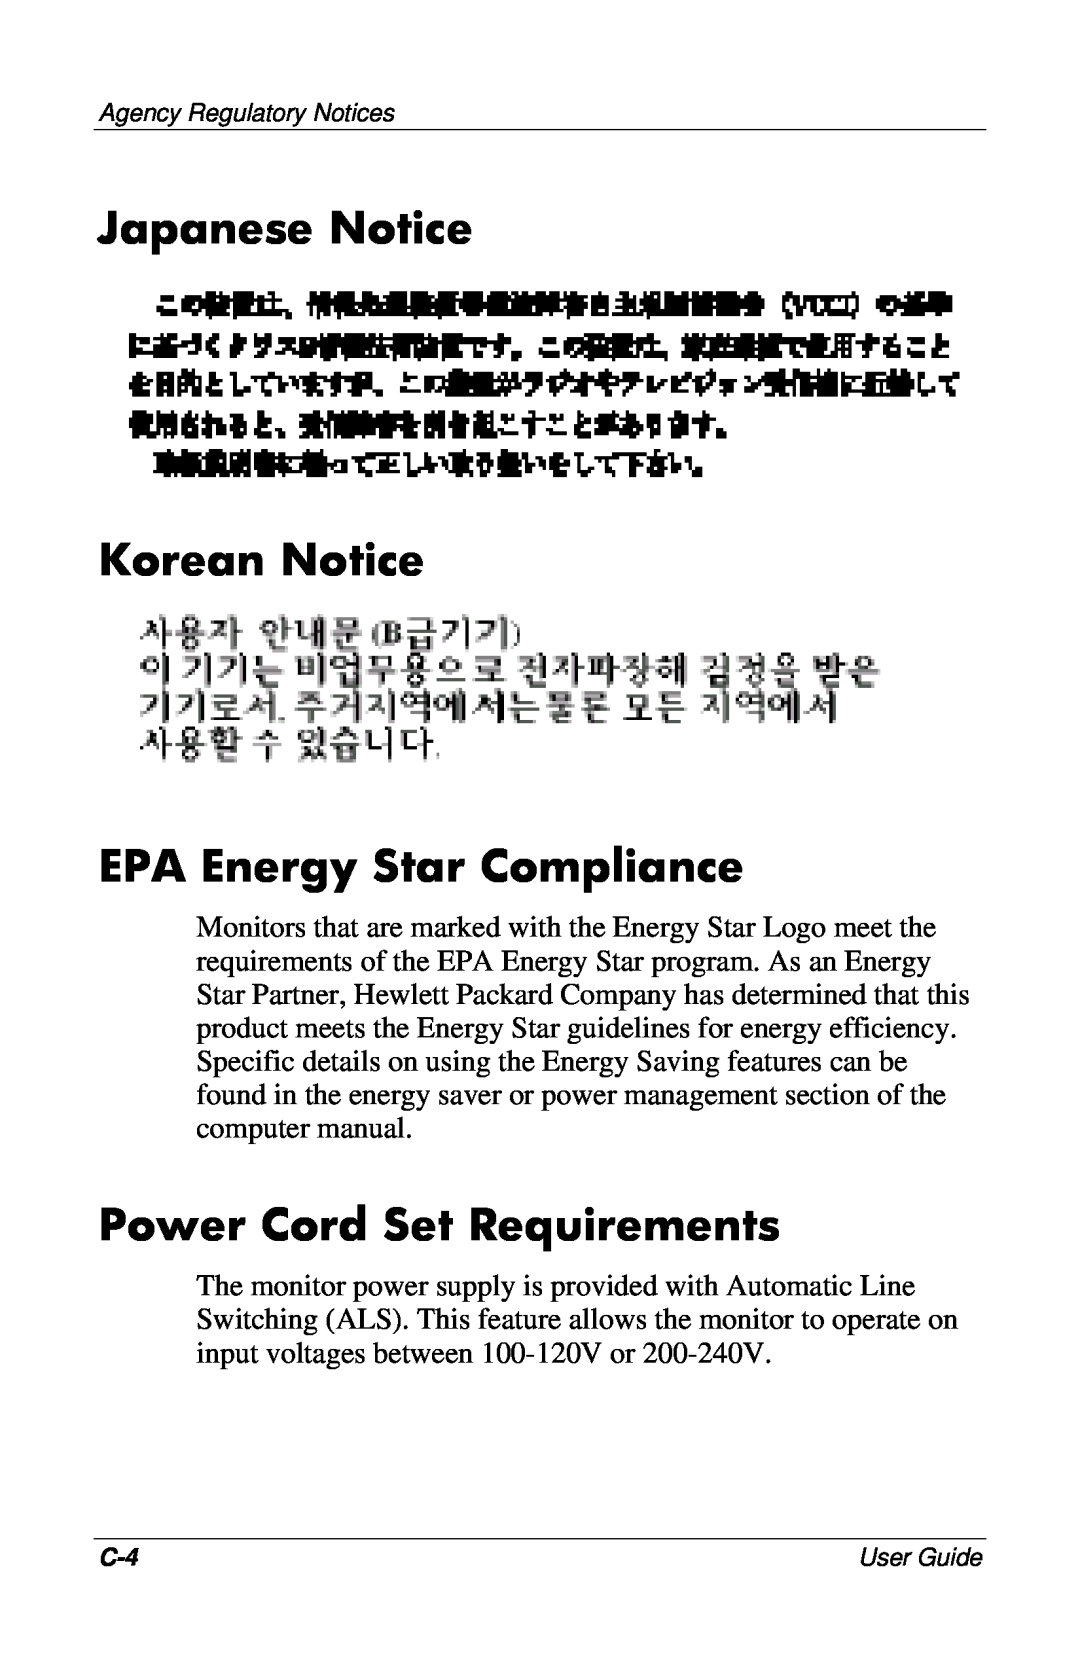 HP 7500, CRT, 9500, mx704, 7550, 5500 Japanese Notice Korean Notice EPA Energy Star Compliance, Power Cord Set Requirements 